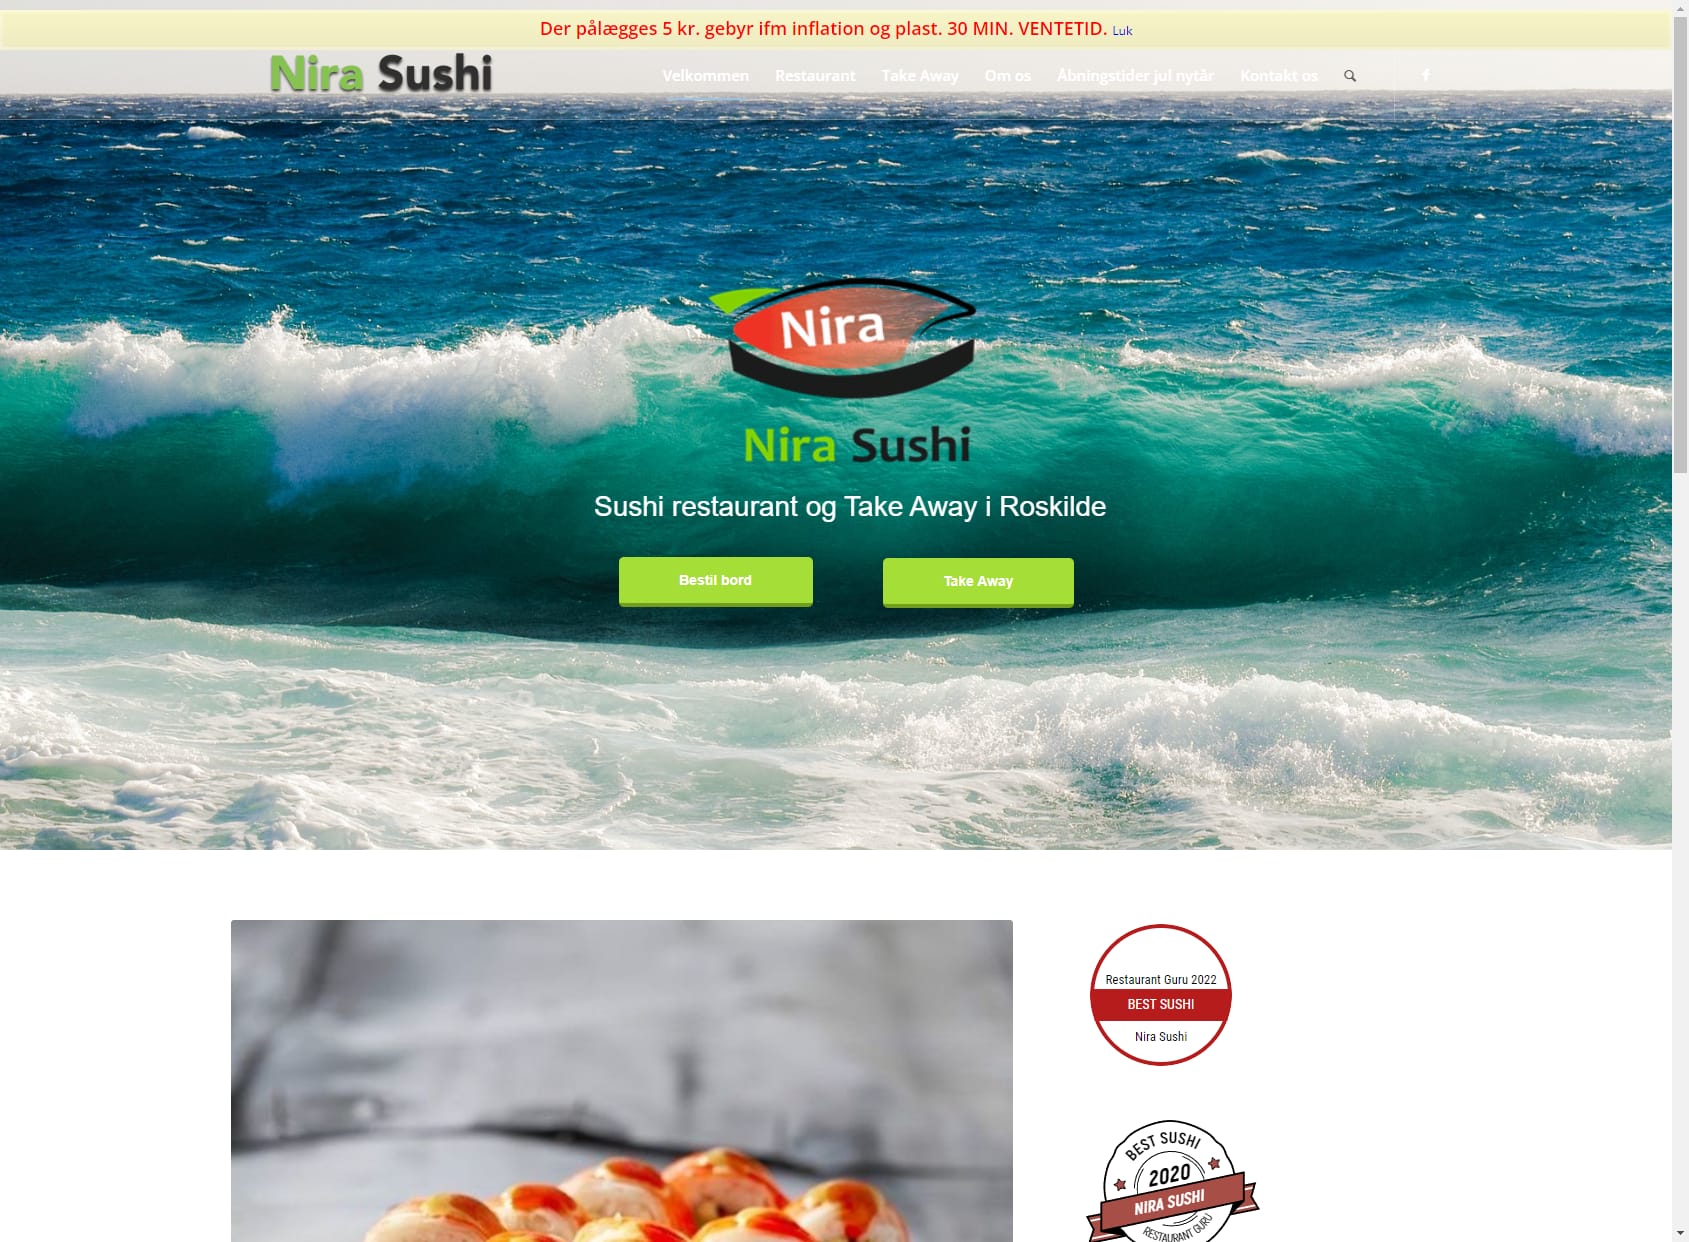 Nira Sushi